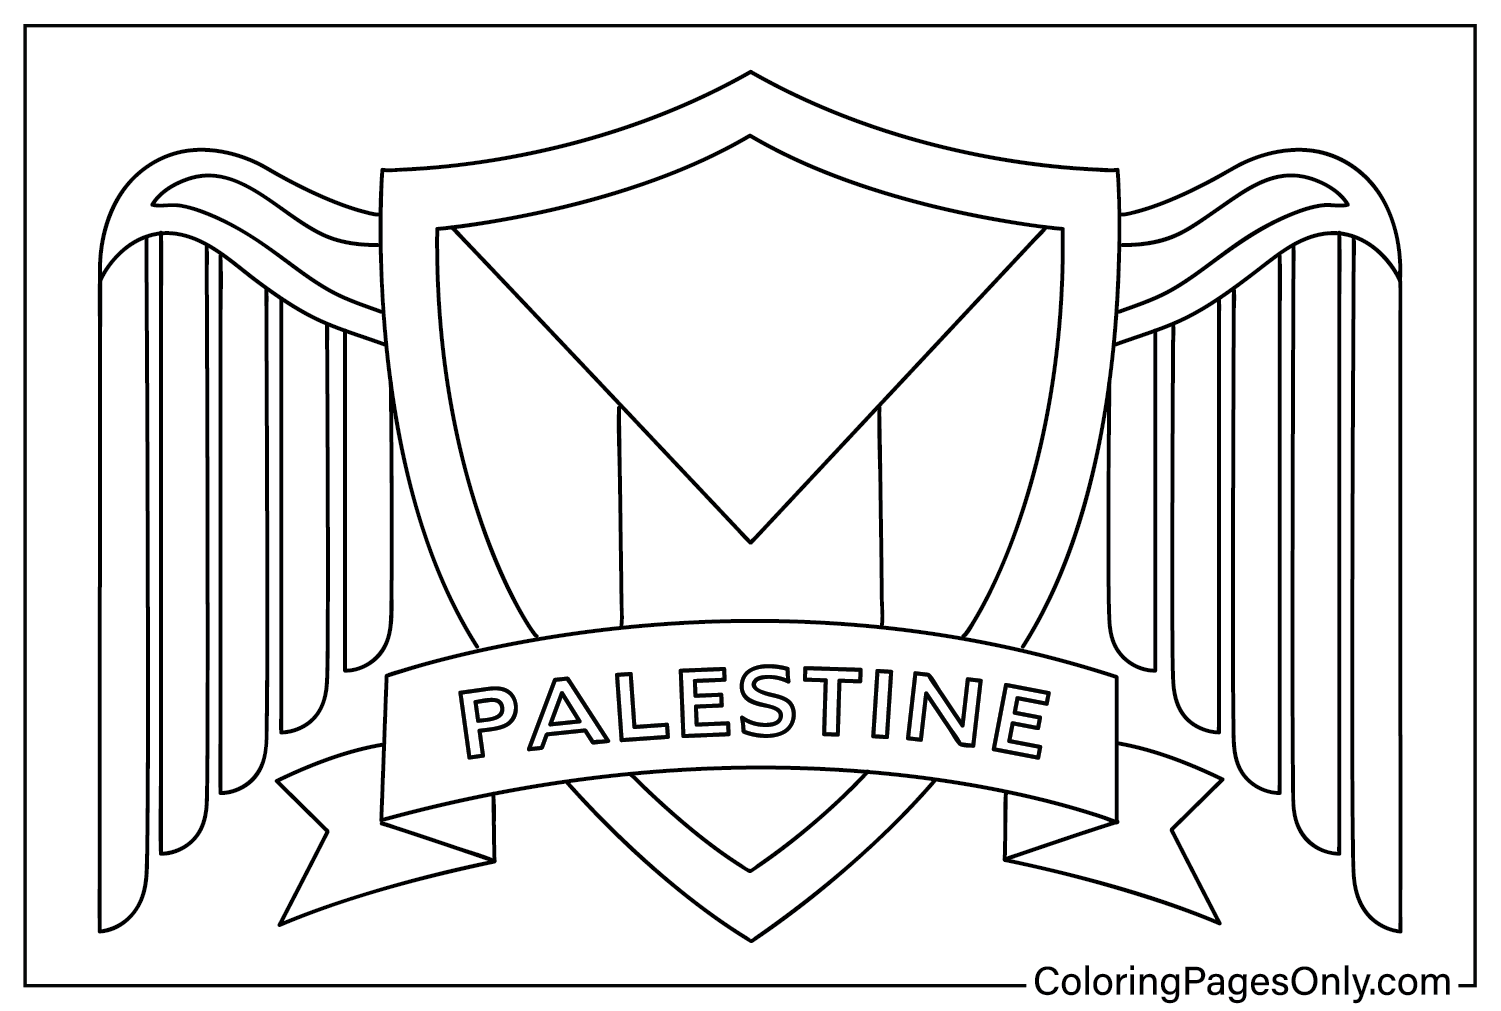 Palestina para colorear